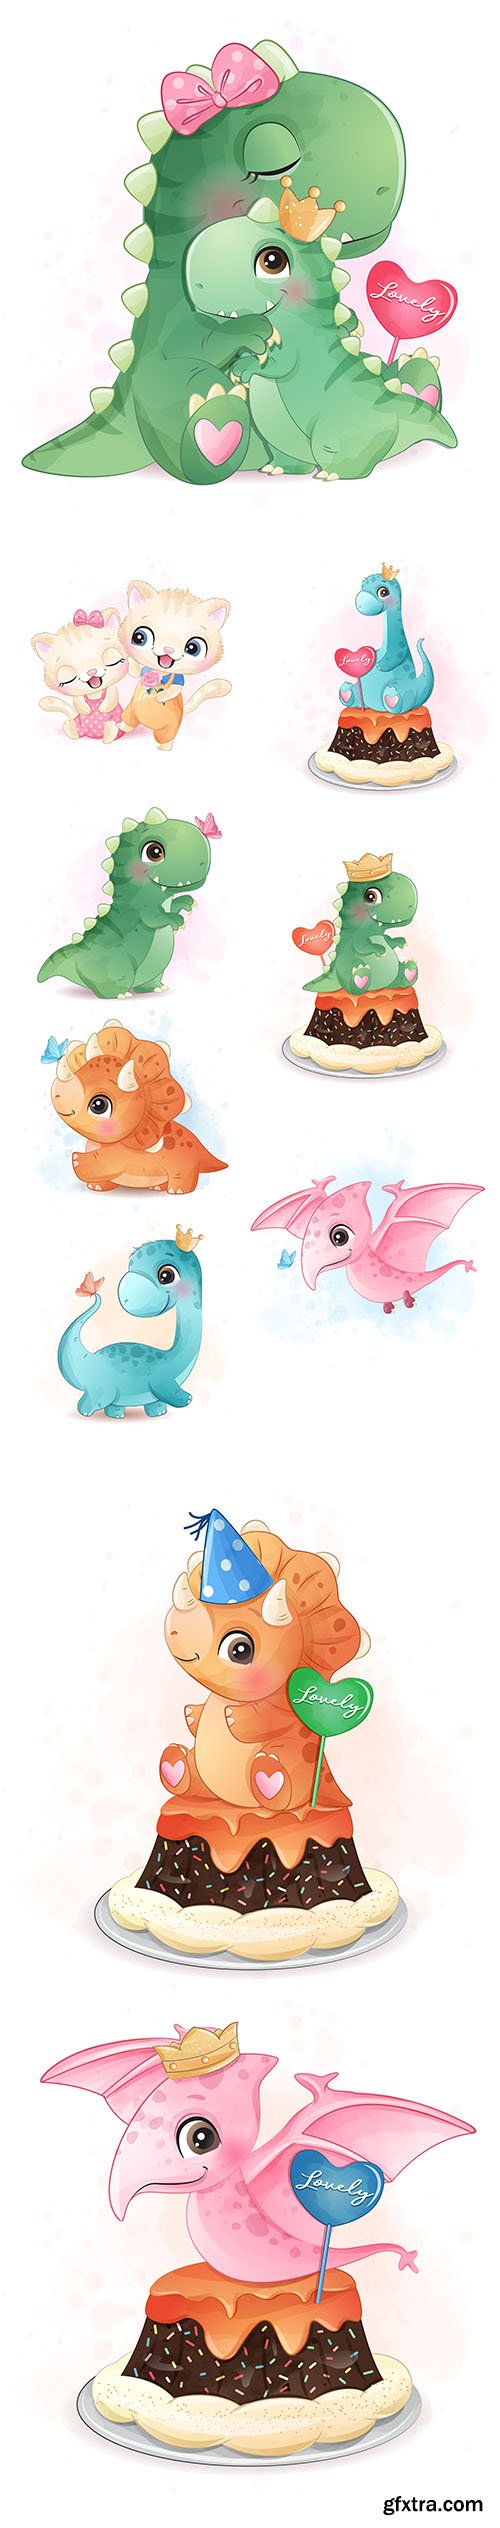 Little Cute Cartoons Animals Illustrations Vol 3